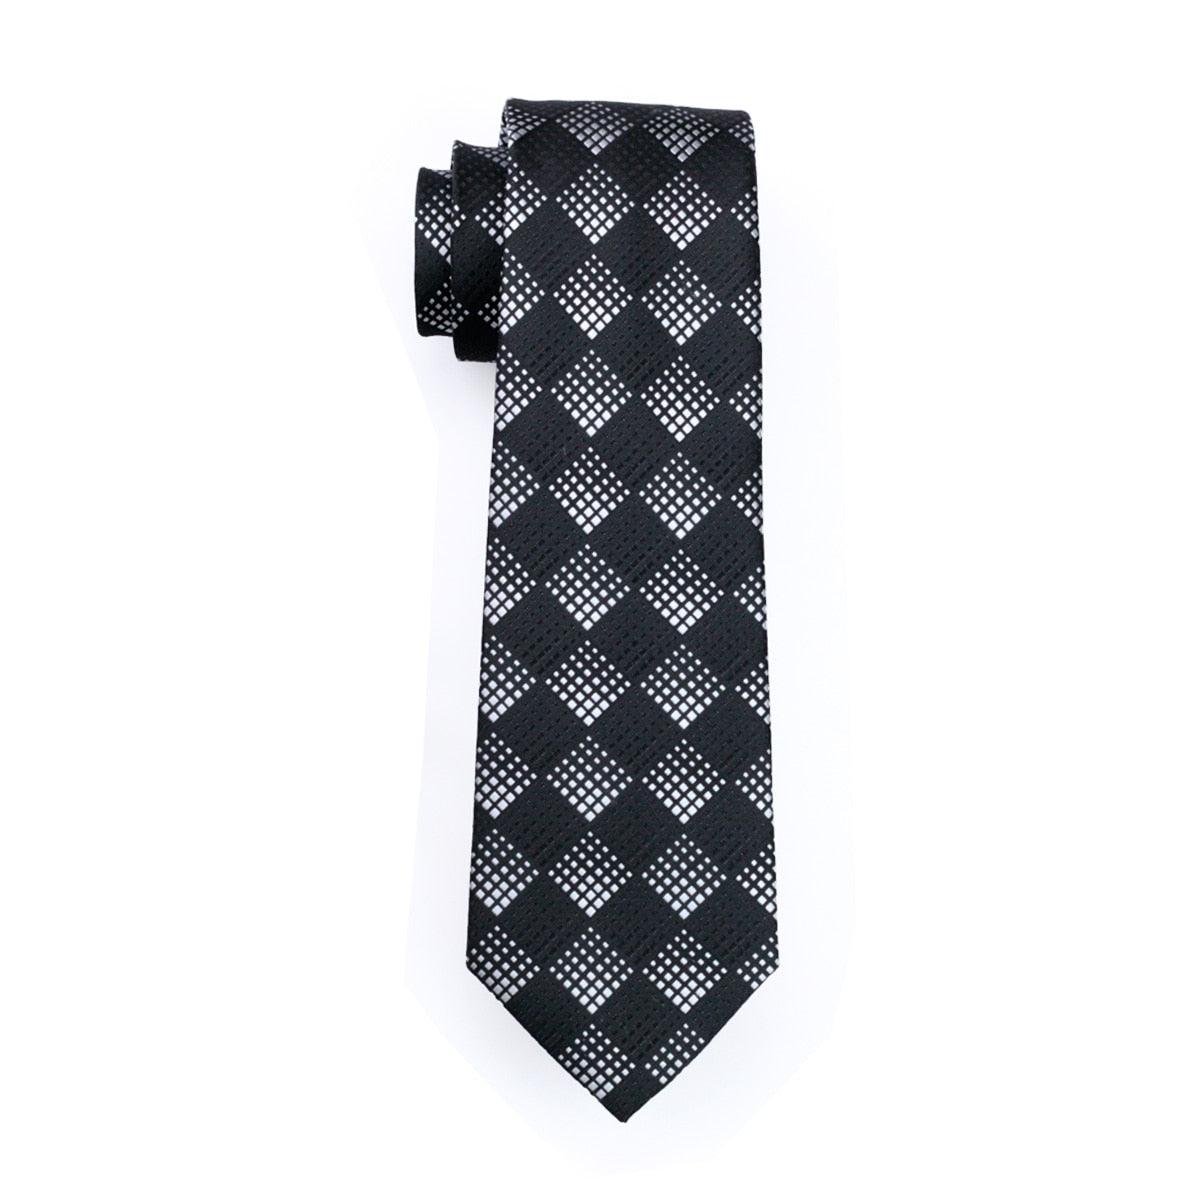 Necktie Black Plaid 100% Silk Jacquard Tie - Hanky Cufflinks Set- Business Wedding Party Ties (2U17)